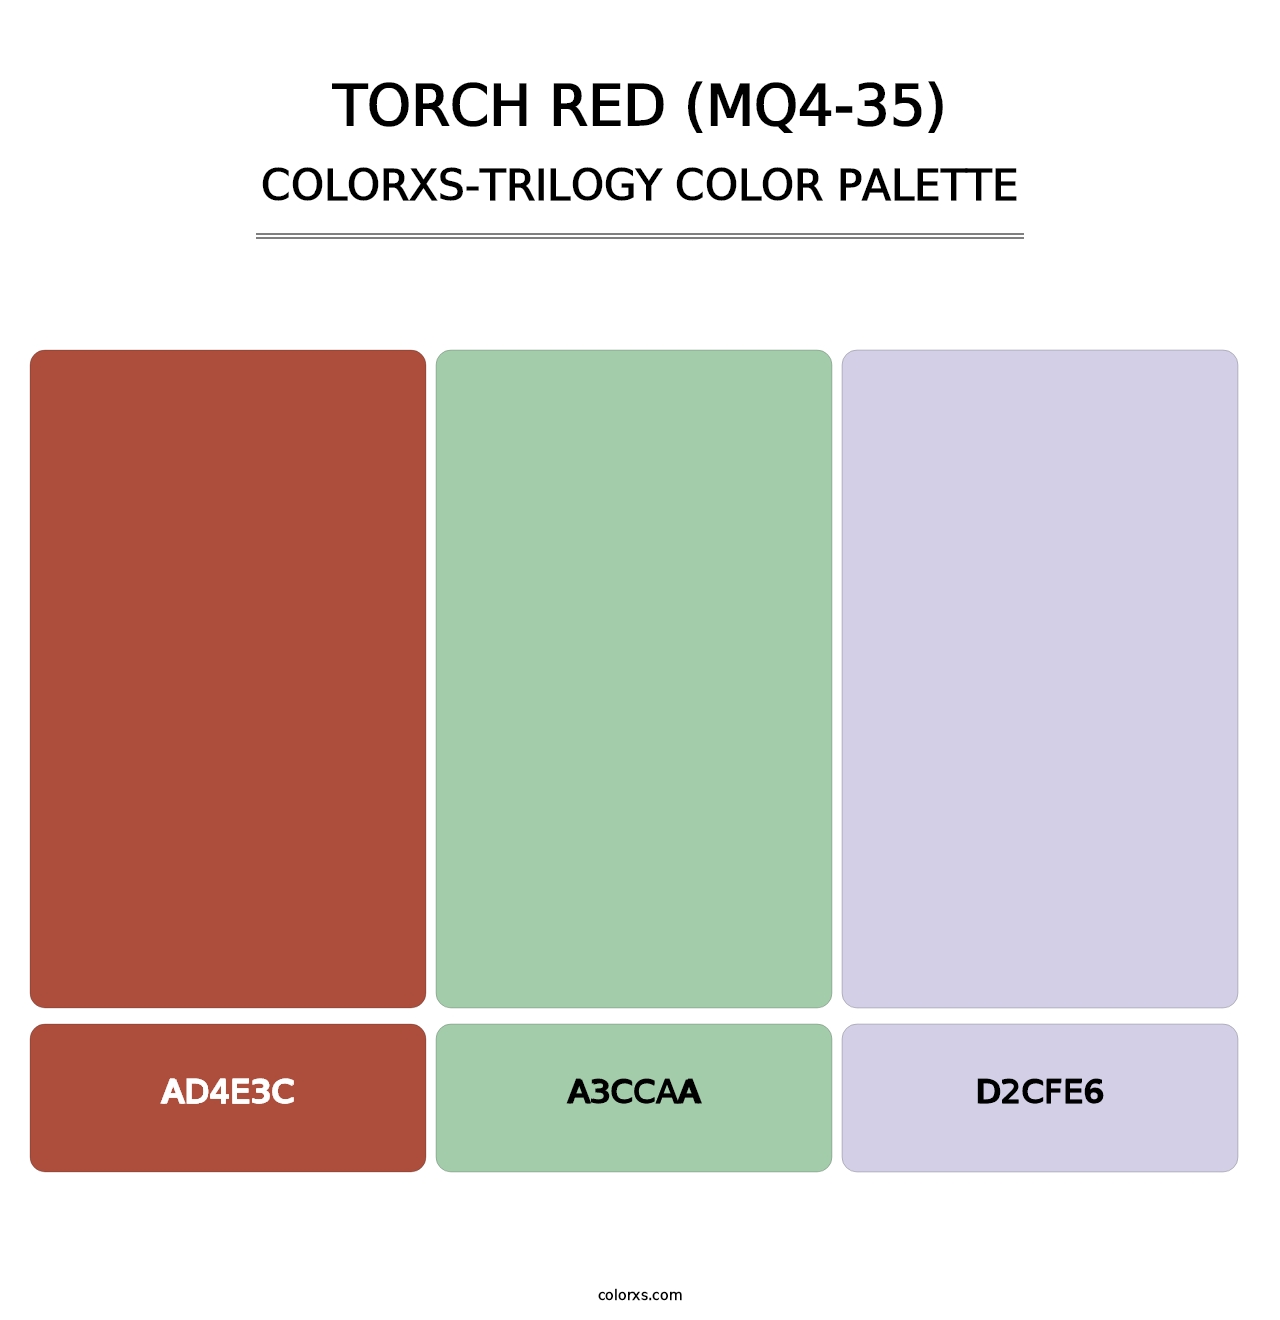 Torch Red (MQ4-35) - Colorxs Trilogy Palette